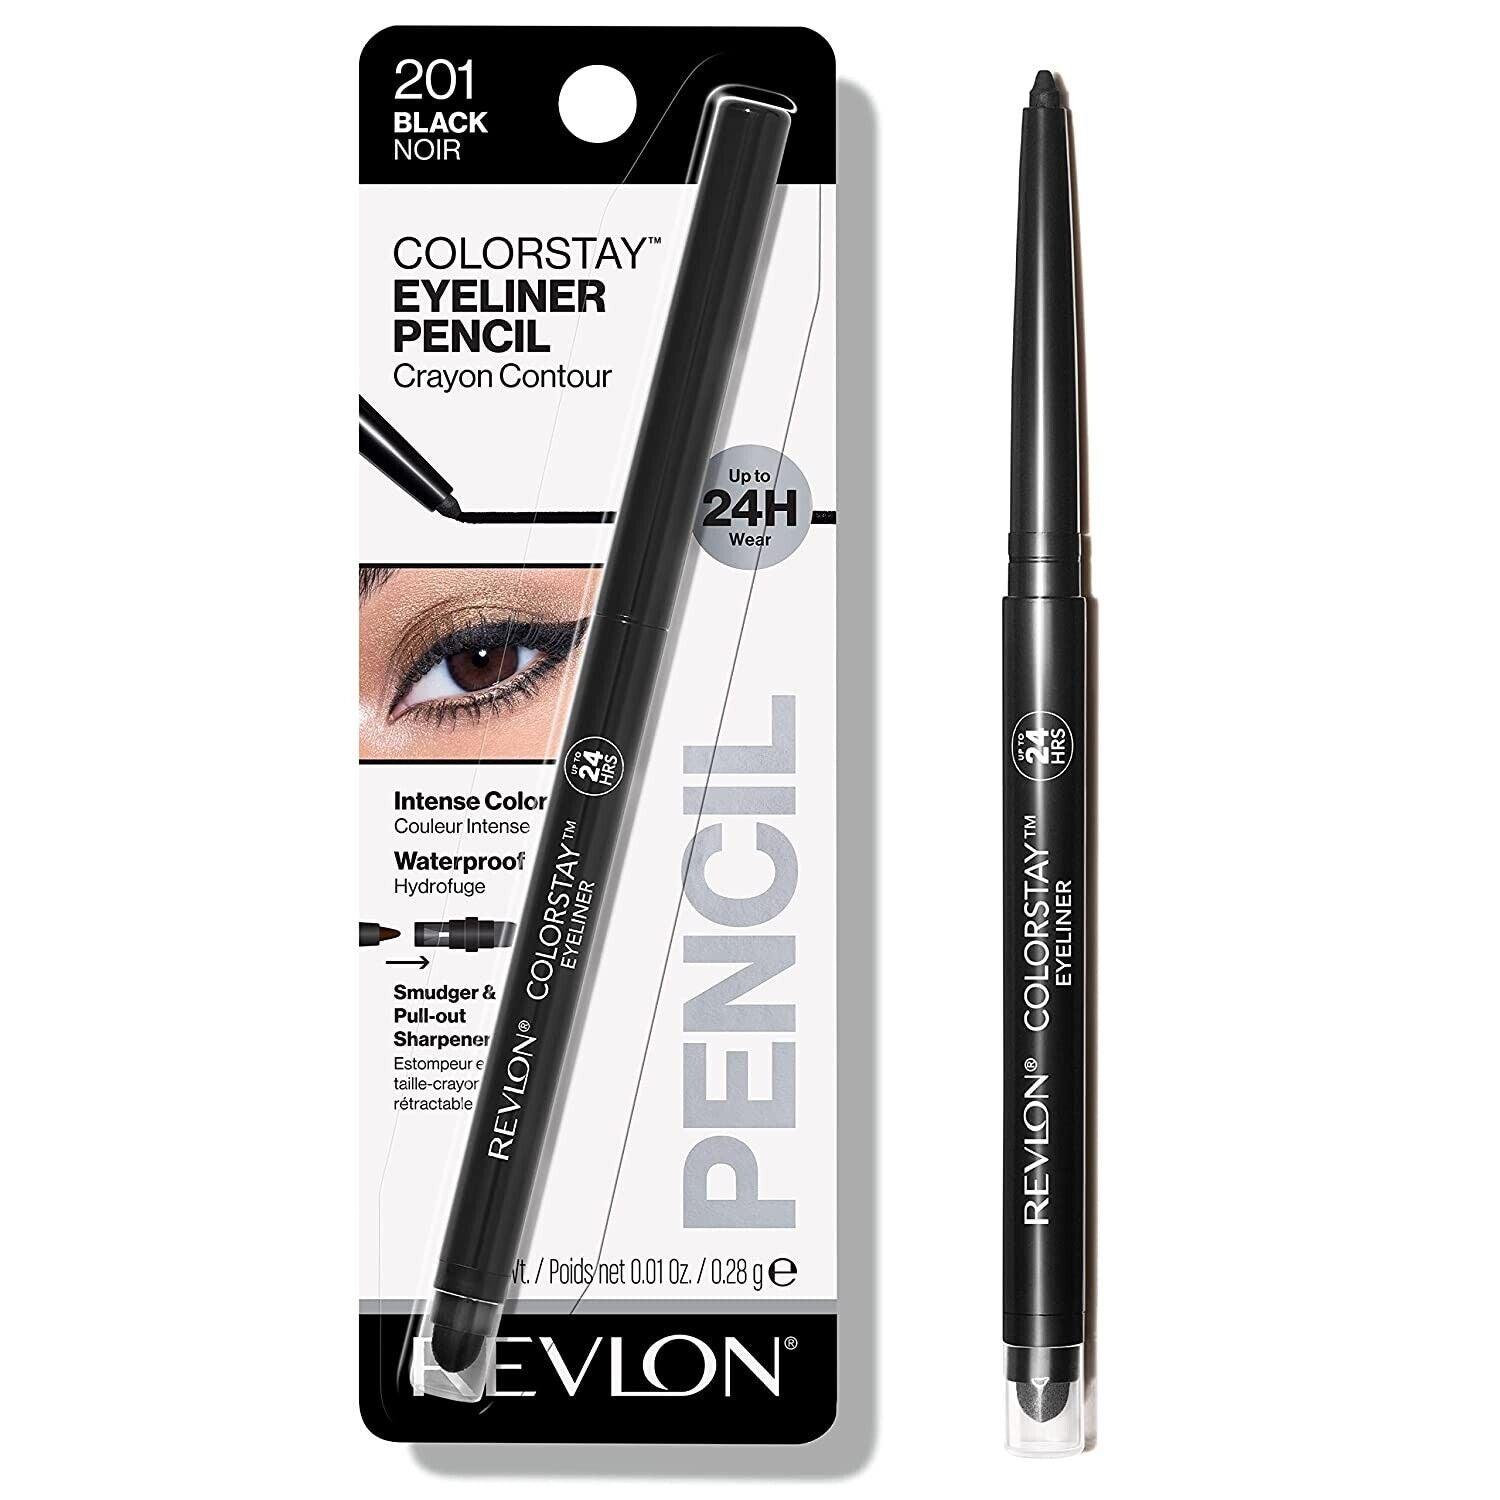 Revlon ColorStay Eye Liner pencil - 201 Black Noir - www.indiancart.com.au - Eye Liner - Revlon - Revlon